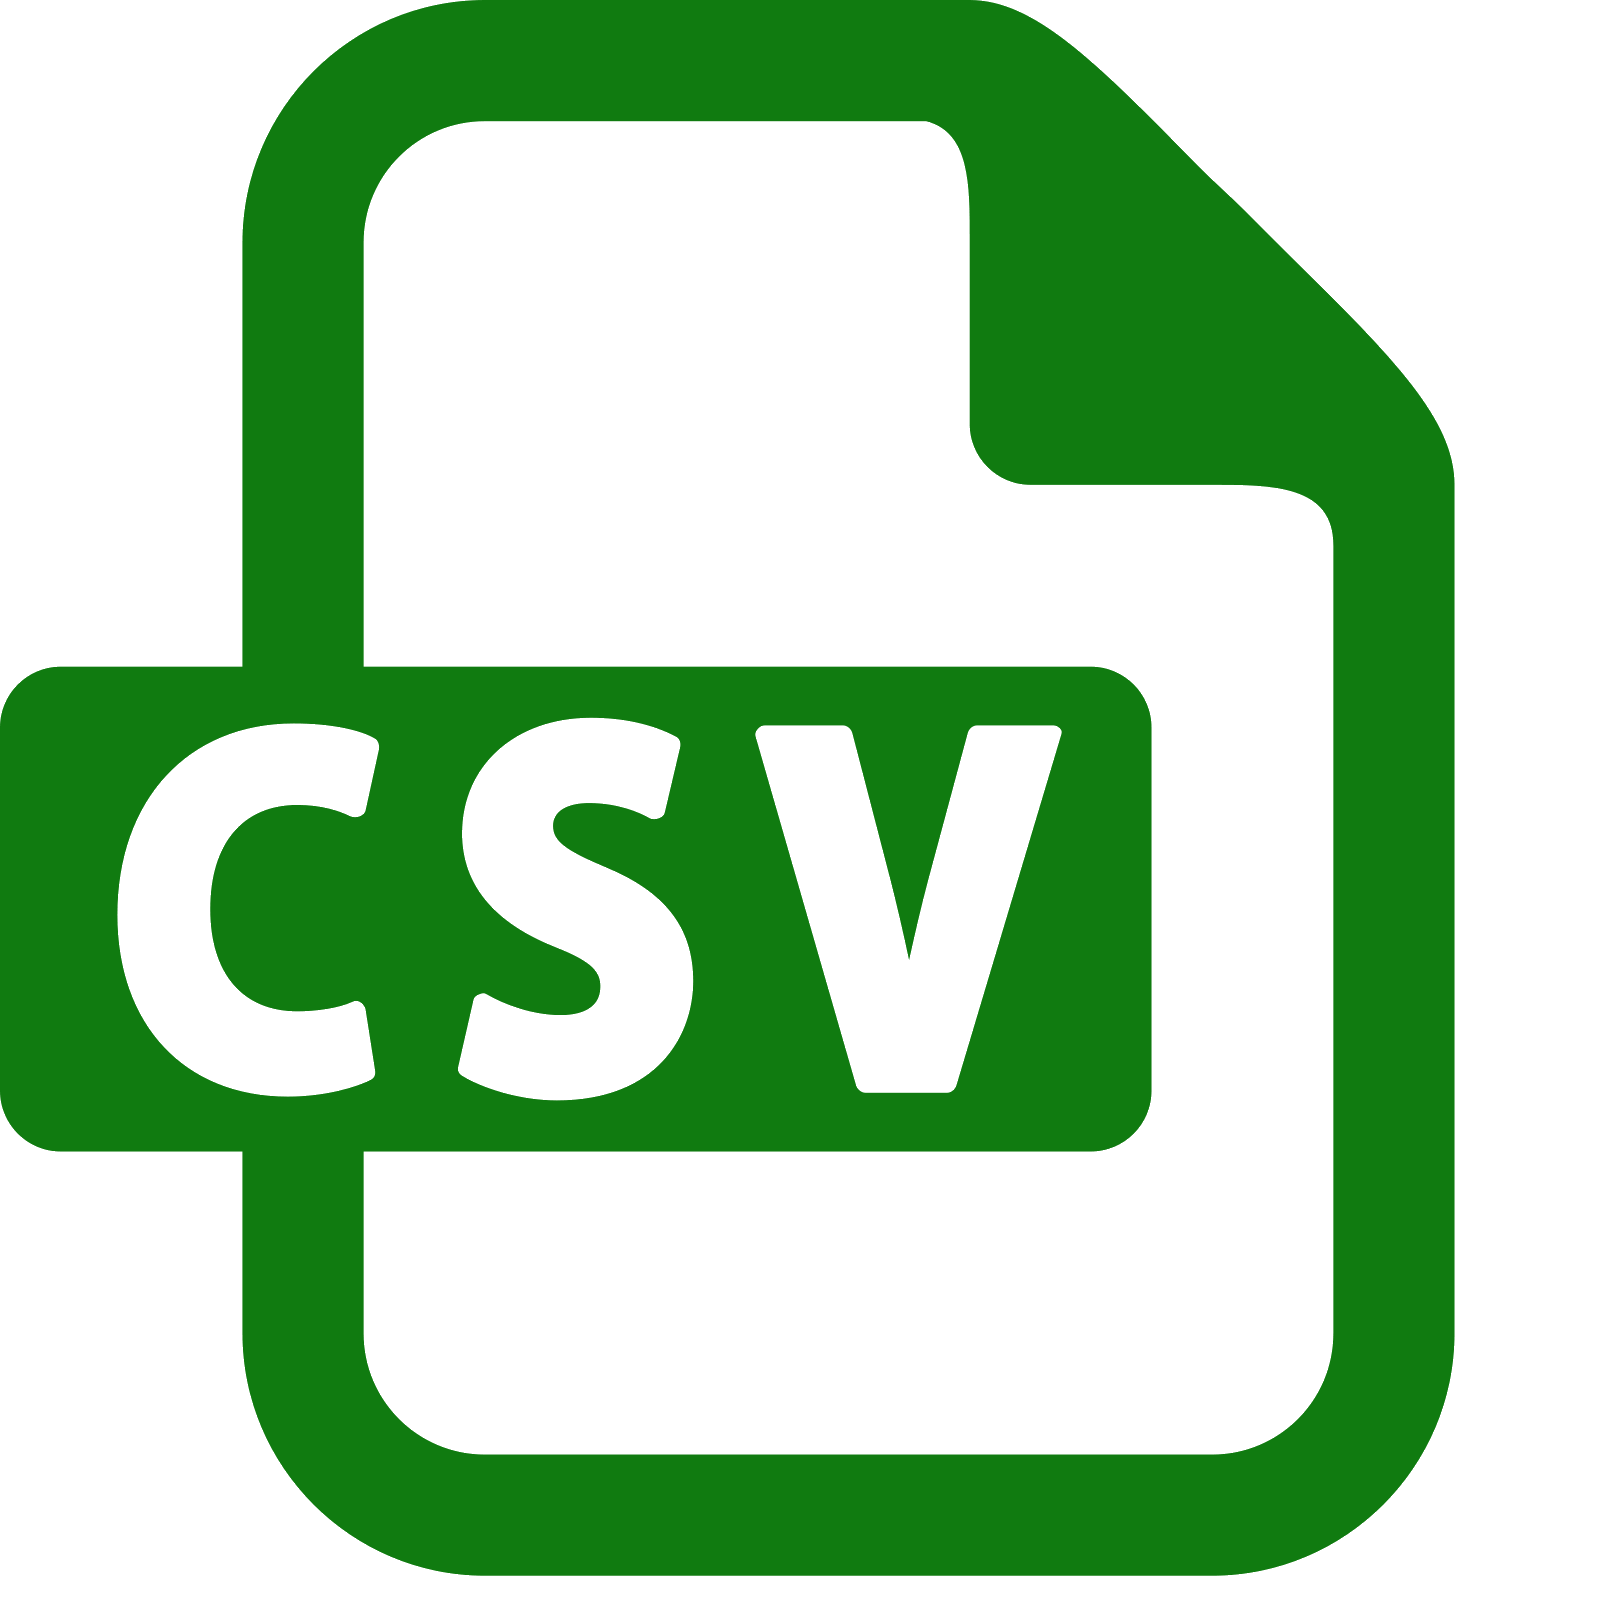 User csv. CSV иконка. Пиктограмма CSV. Формат файла CSV. Иконка CSV файла.